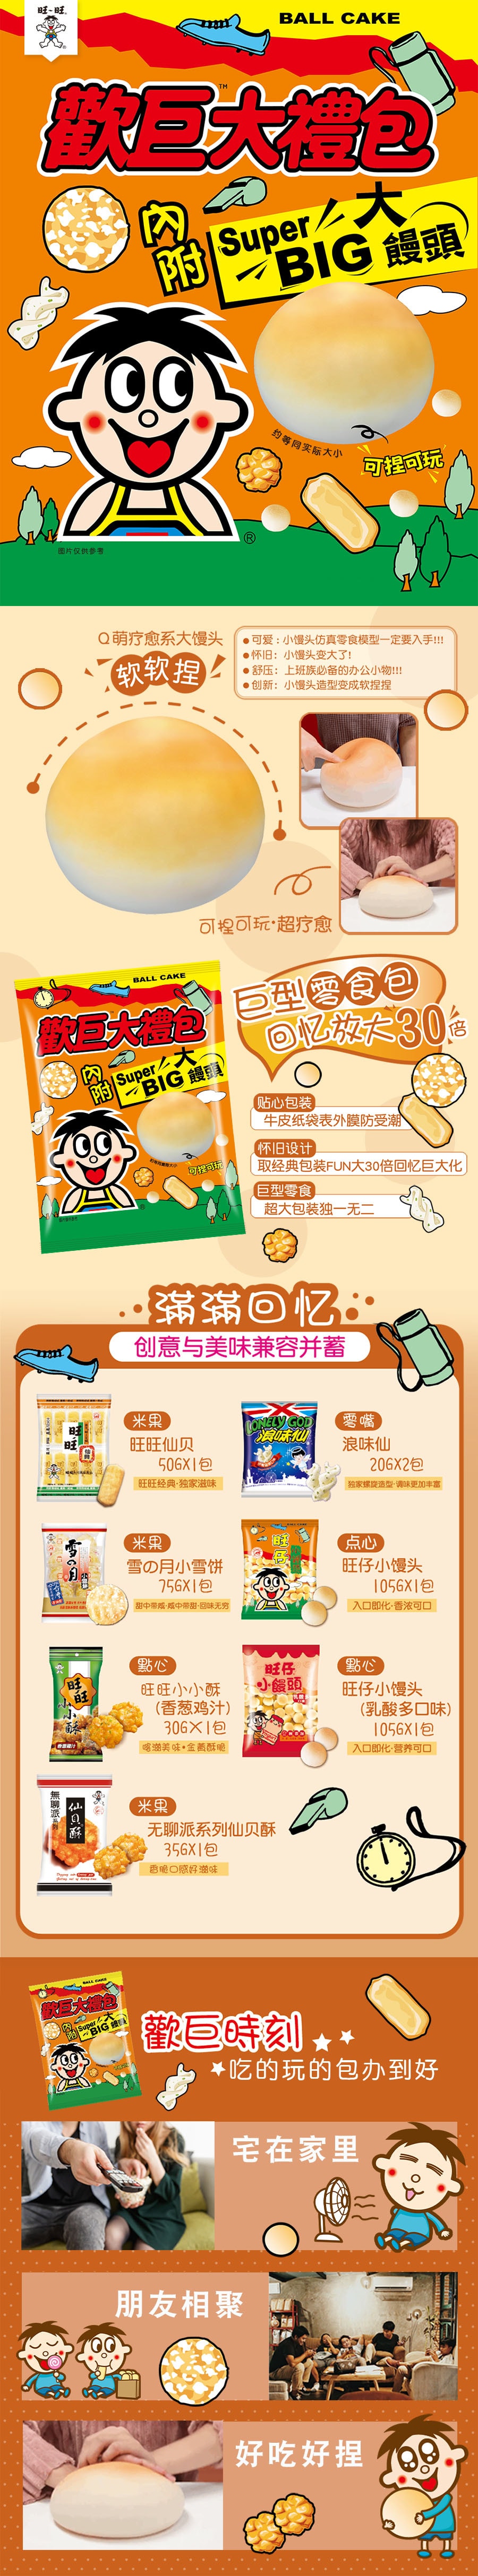 Taiwan Happy Together Huge Variety Snacks Bag - Super BIG Ball Cake Toy / Buy Get Blind box 1Bag 440g (Free Blind Box)